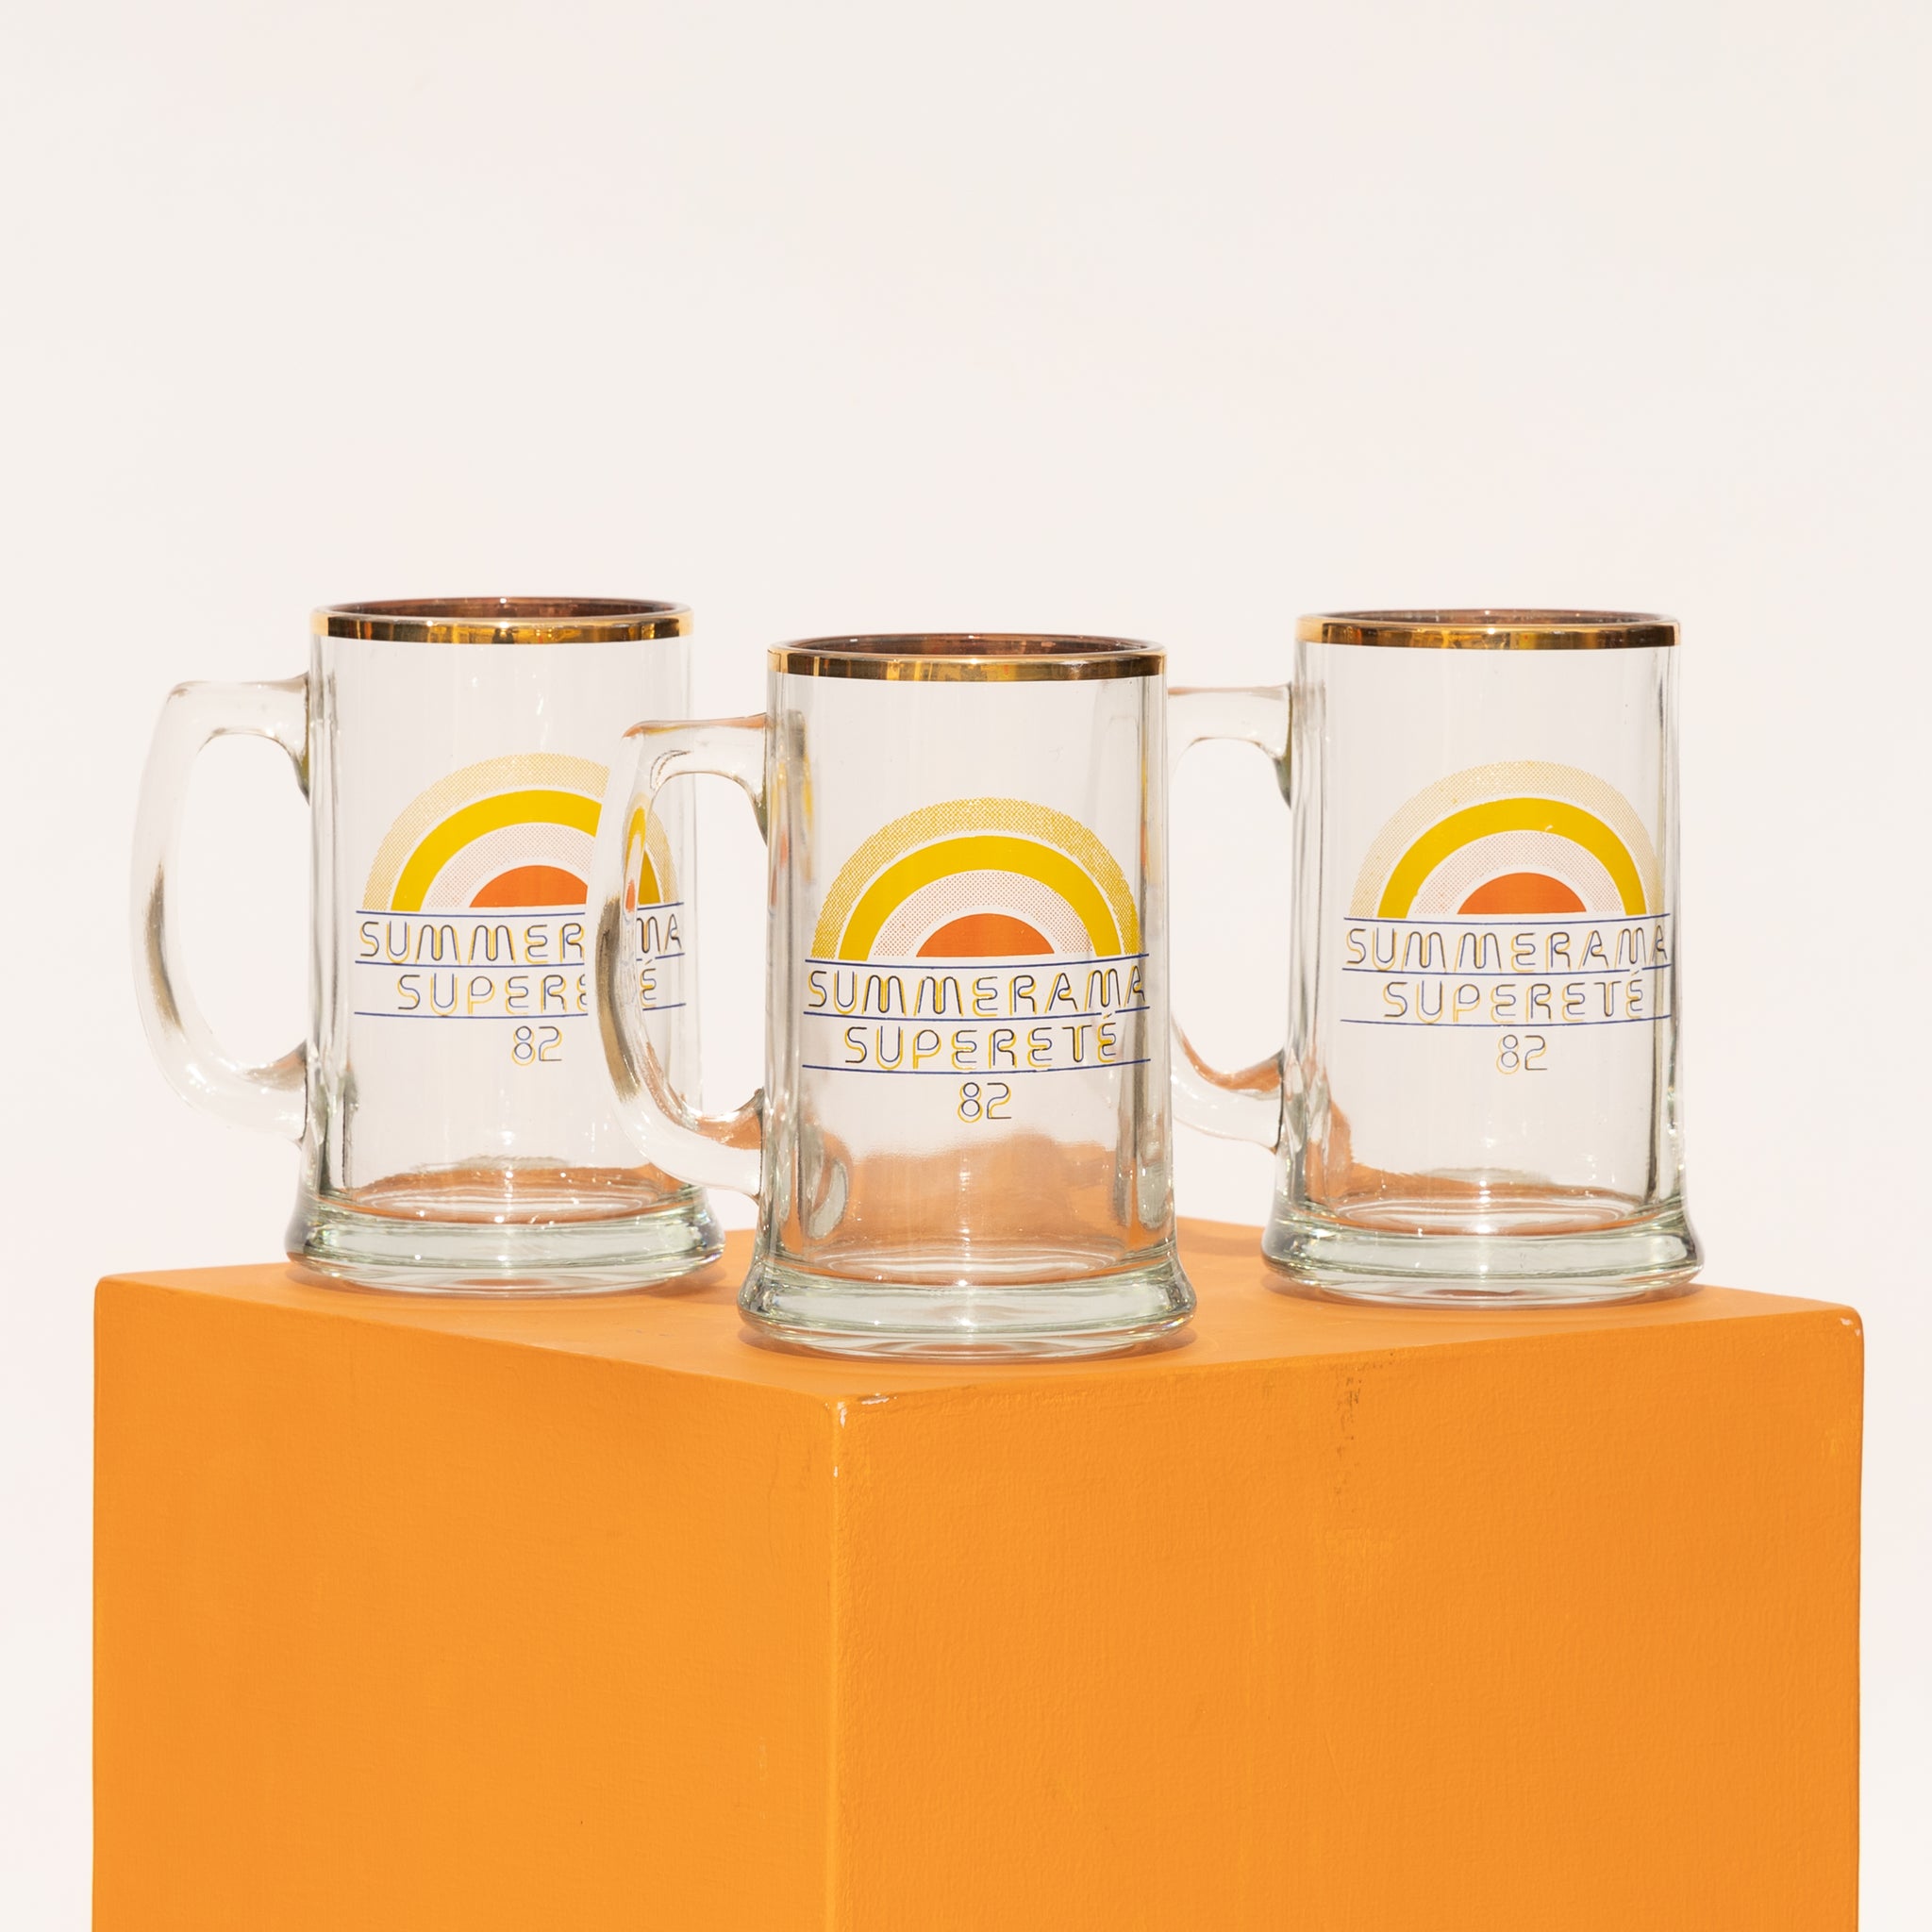 Summerama Beer Mugs - Set of 3